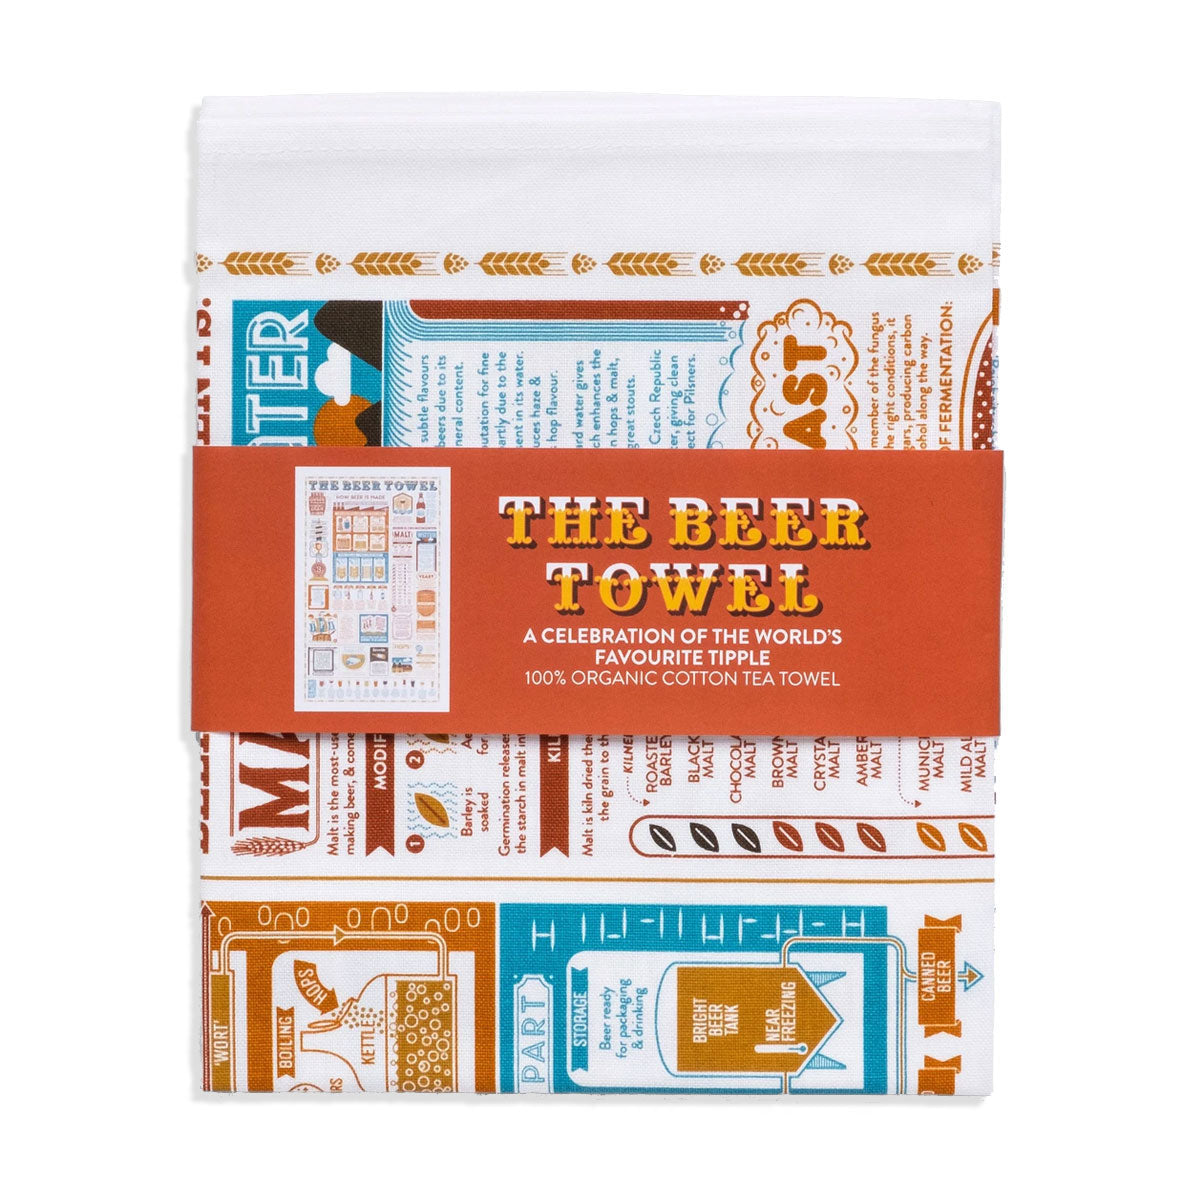 The Beer Guide Tea Towel